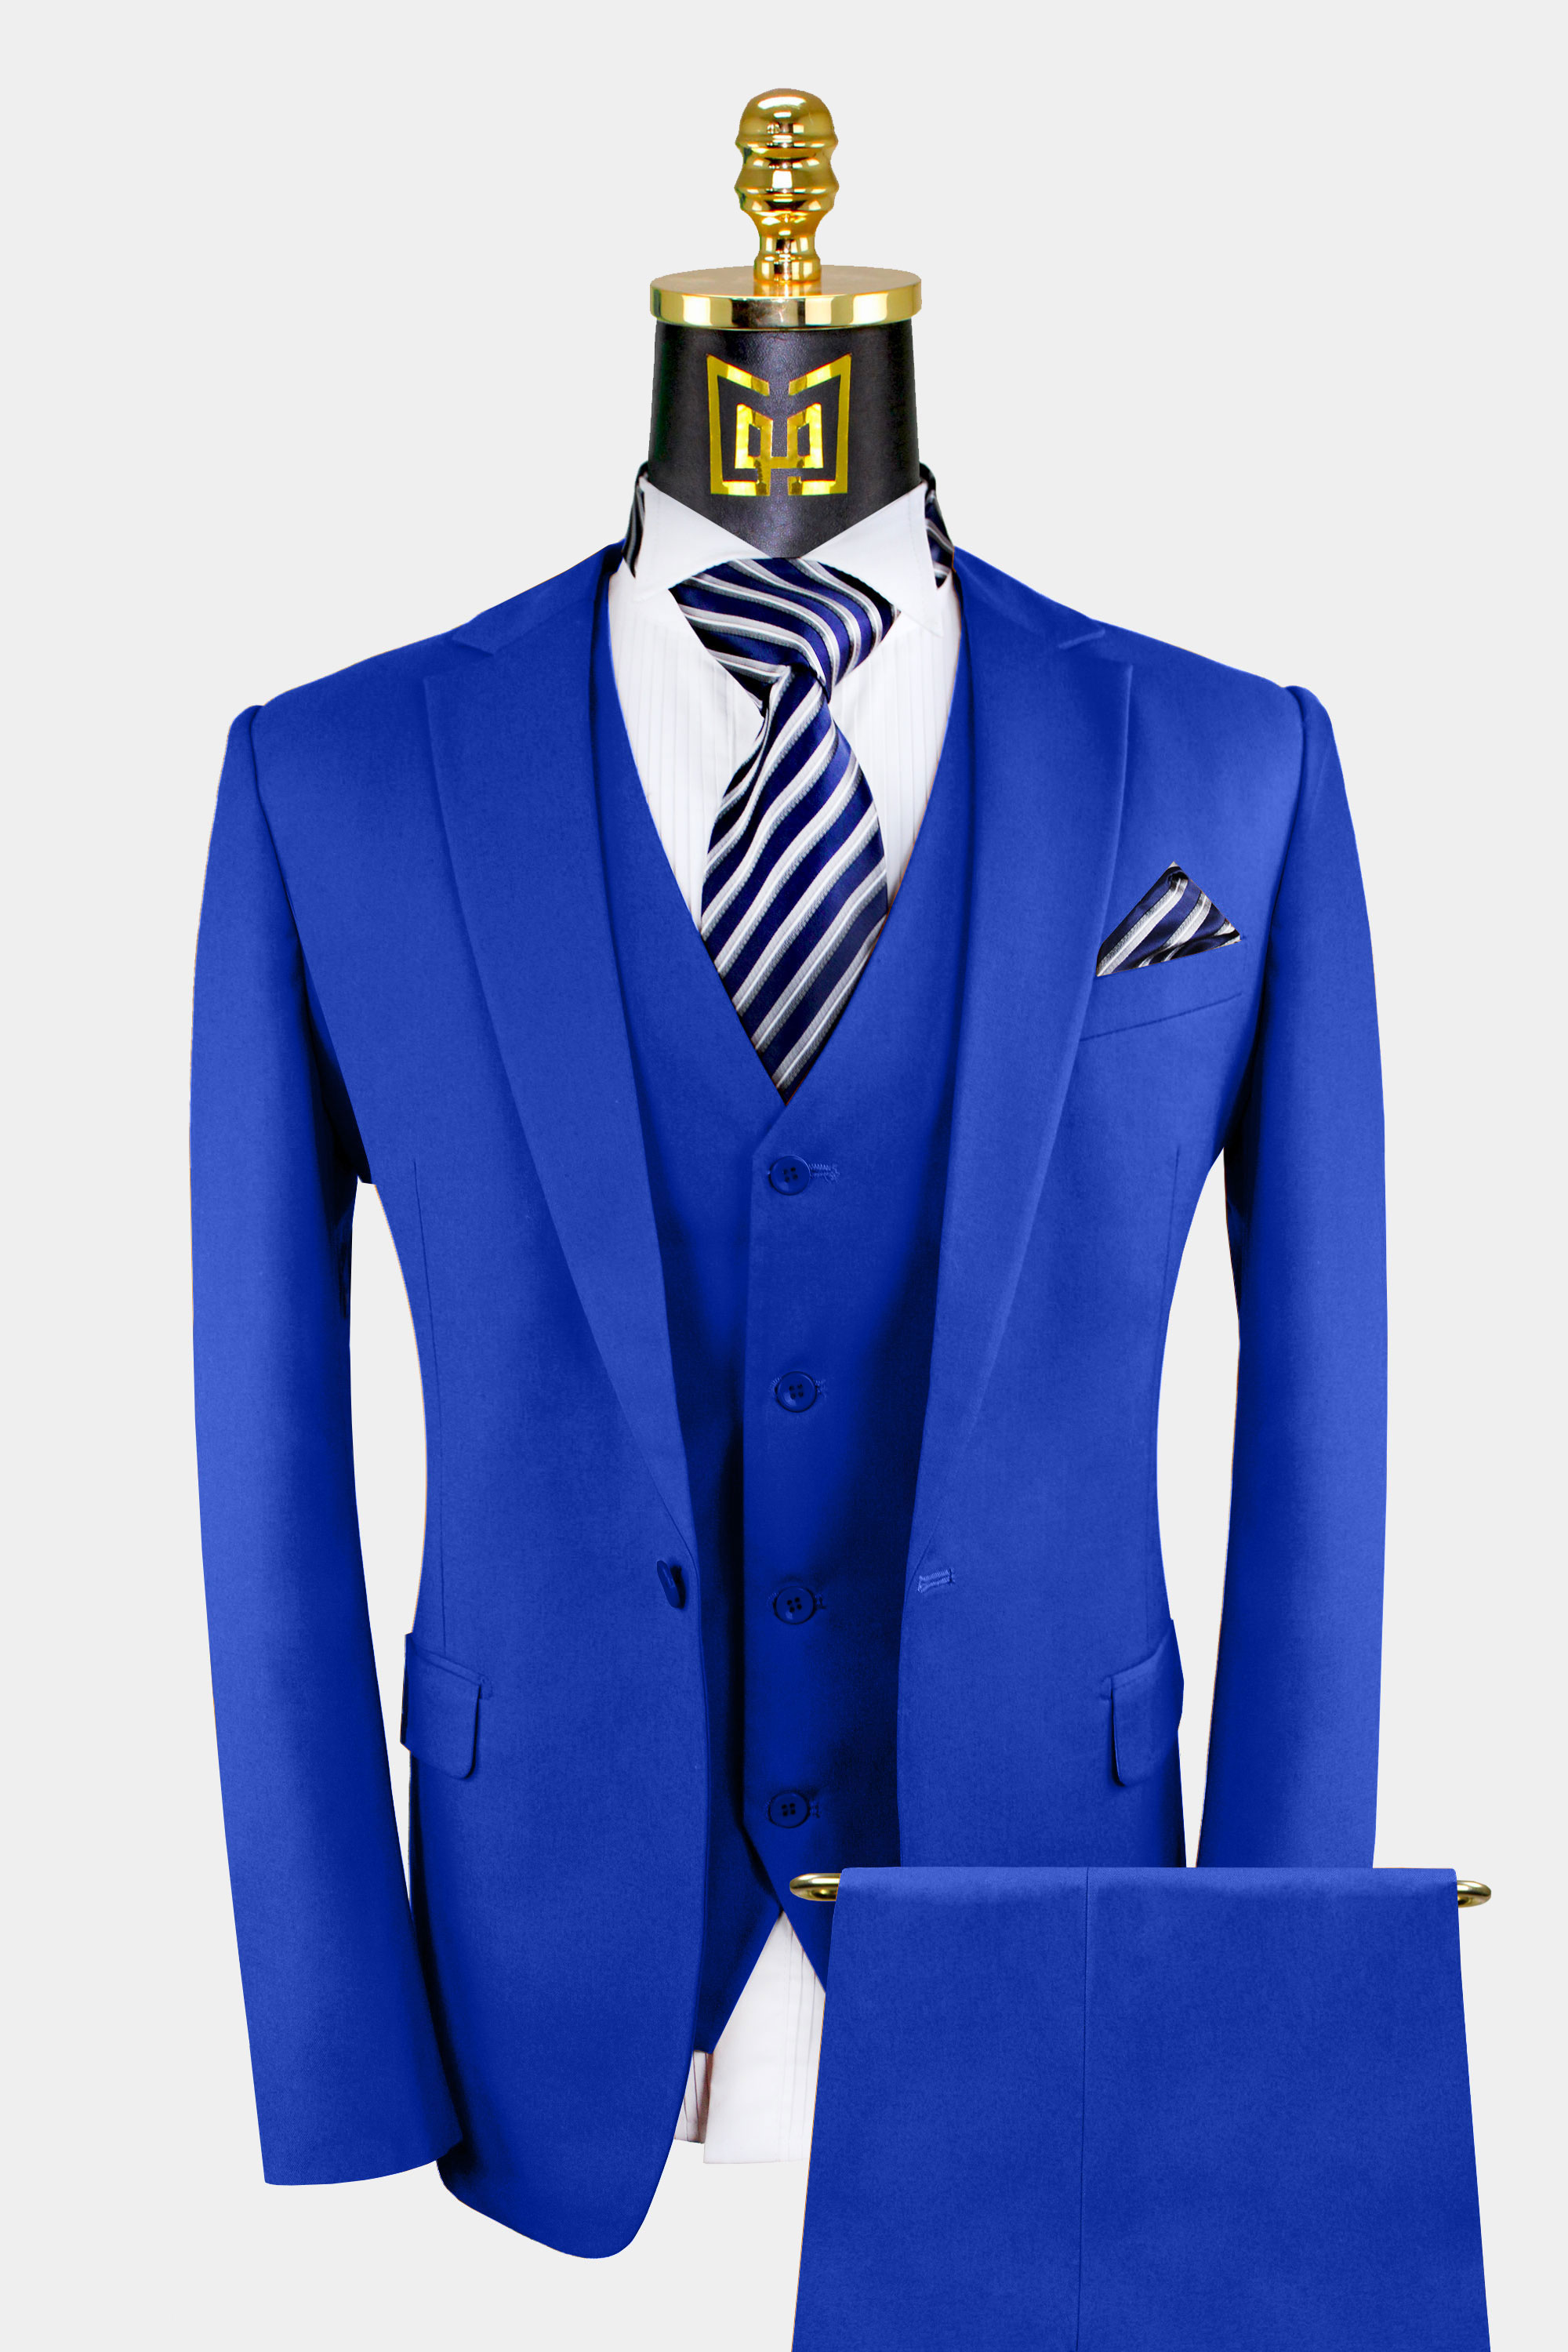 Mens Wedding Suits Royal Blue | peacecommission.kdsg.gov.ng